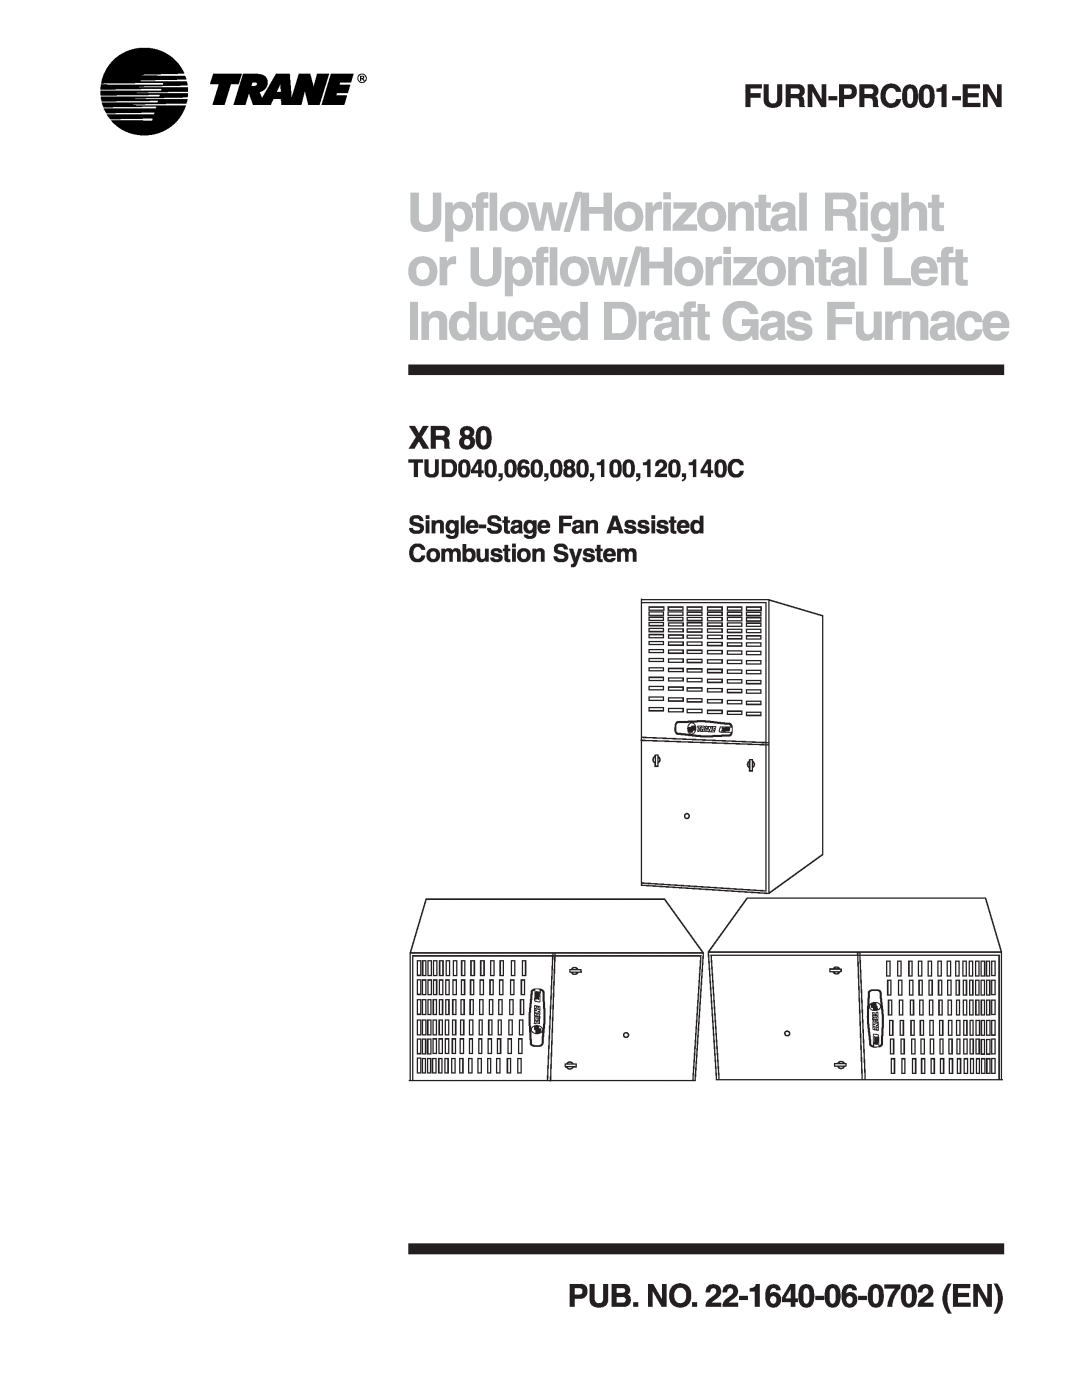 Trane Upflow/Horizontal Right or Upflow/Horizontal Left Induced Draft Gas Furnace manual FURN-PRC001-EN 